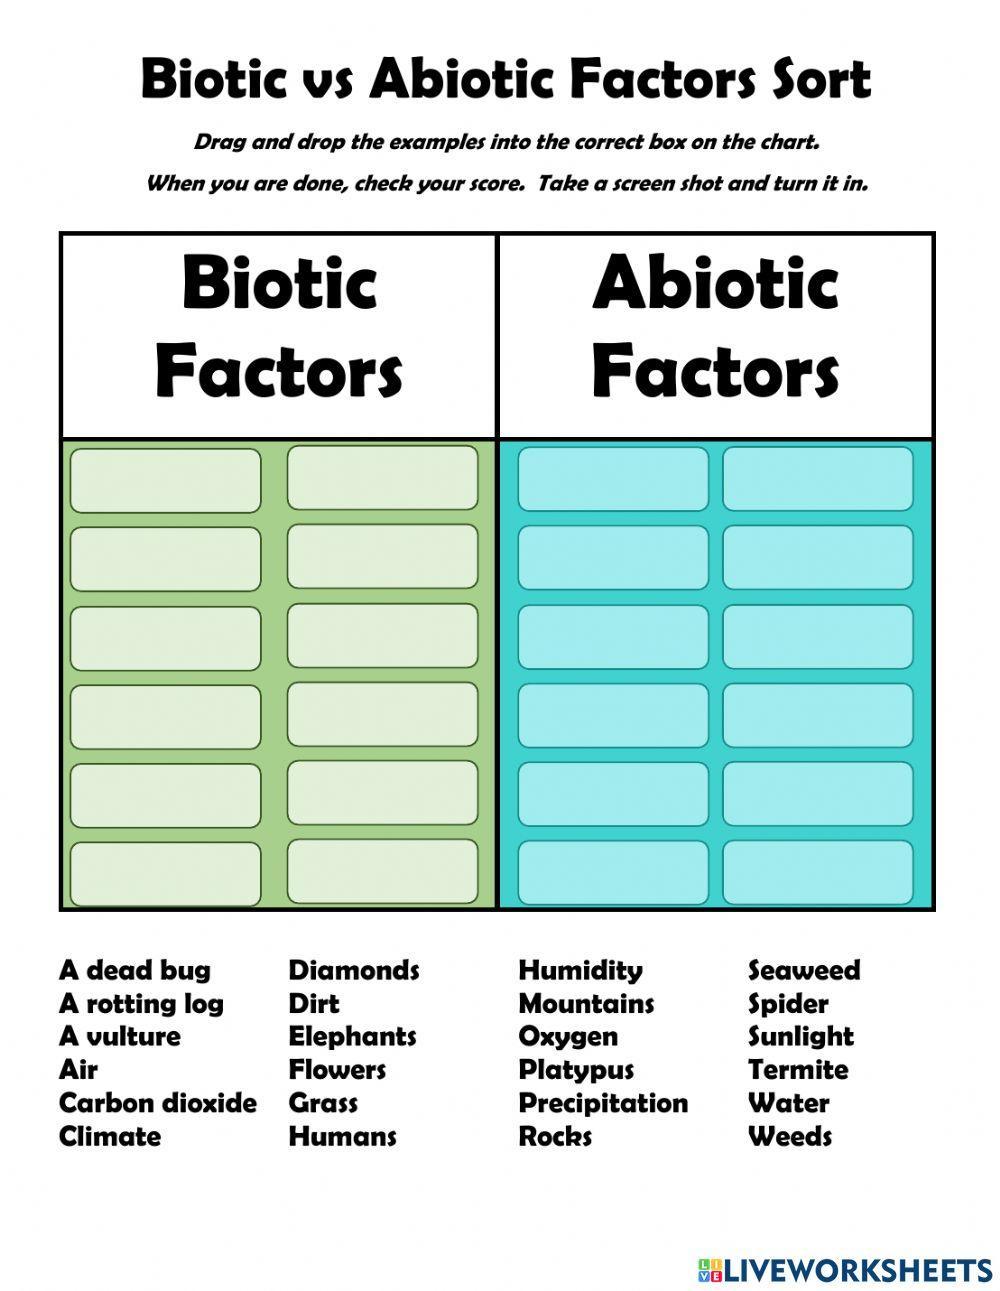 Biotic and Abiotic Factors Sorting Activity